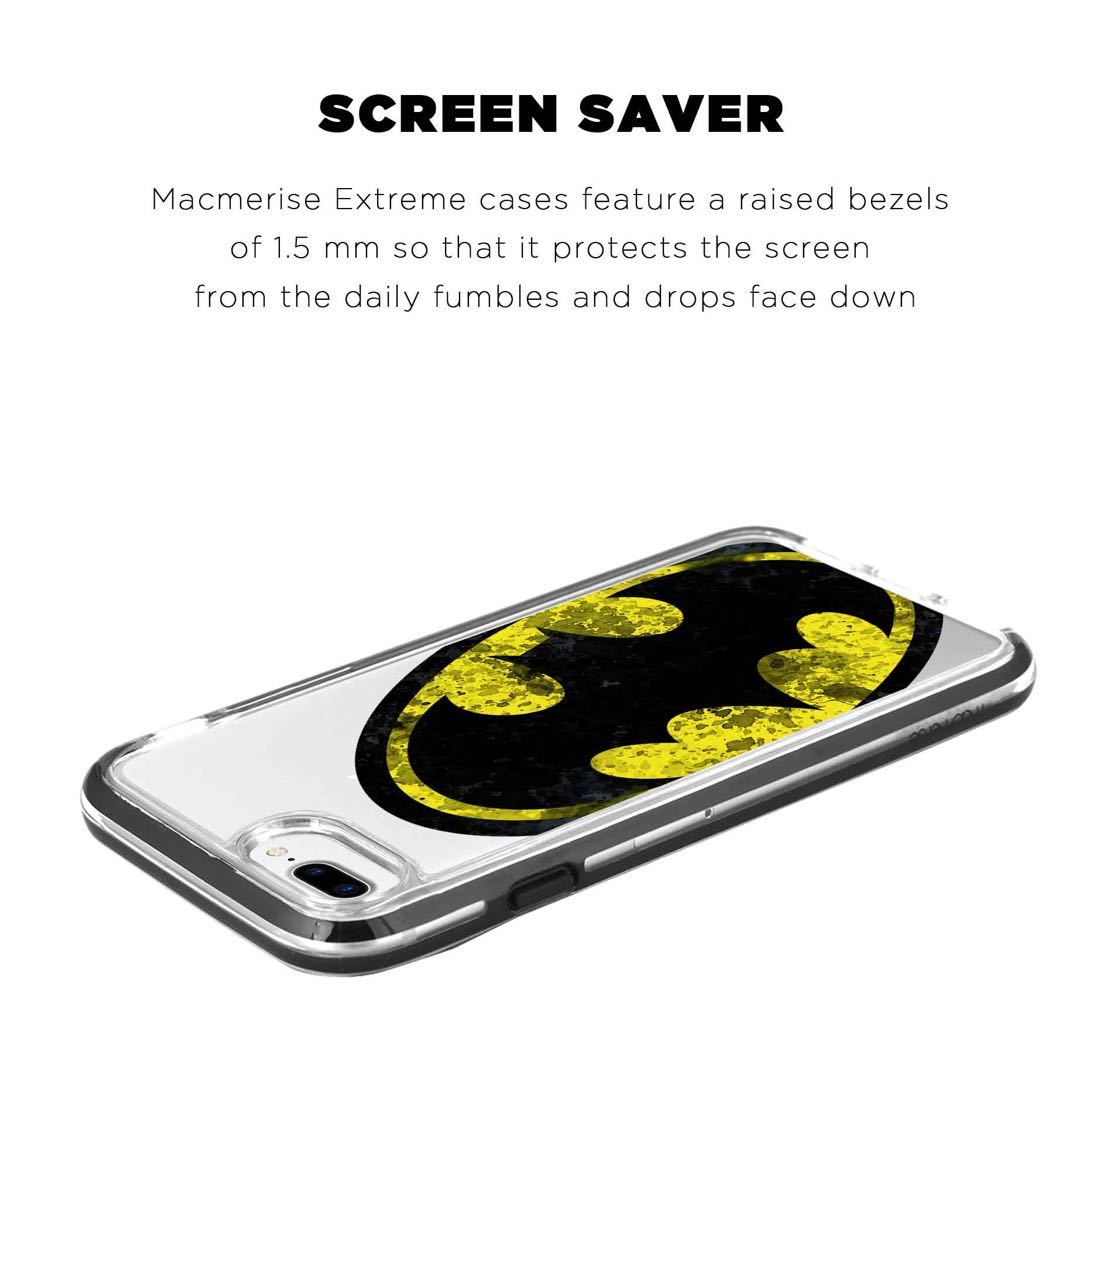 Batman Splatter - Extreme Phone Case for iPhone 7 Plus